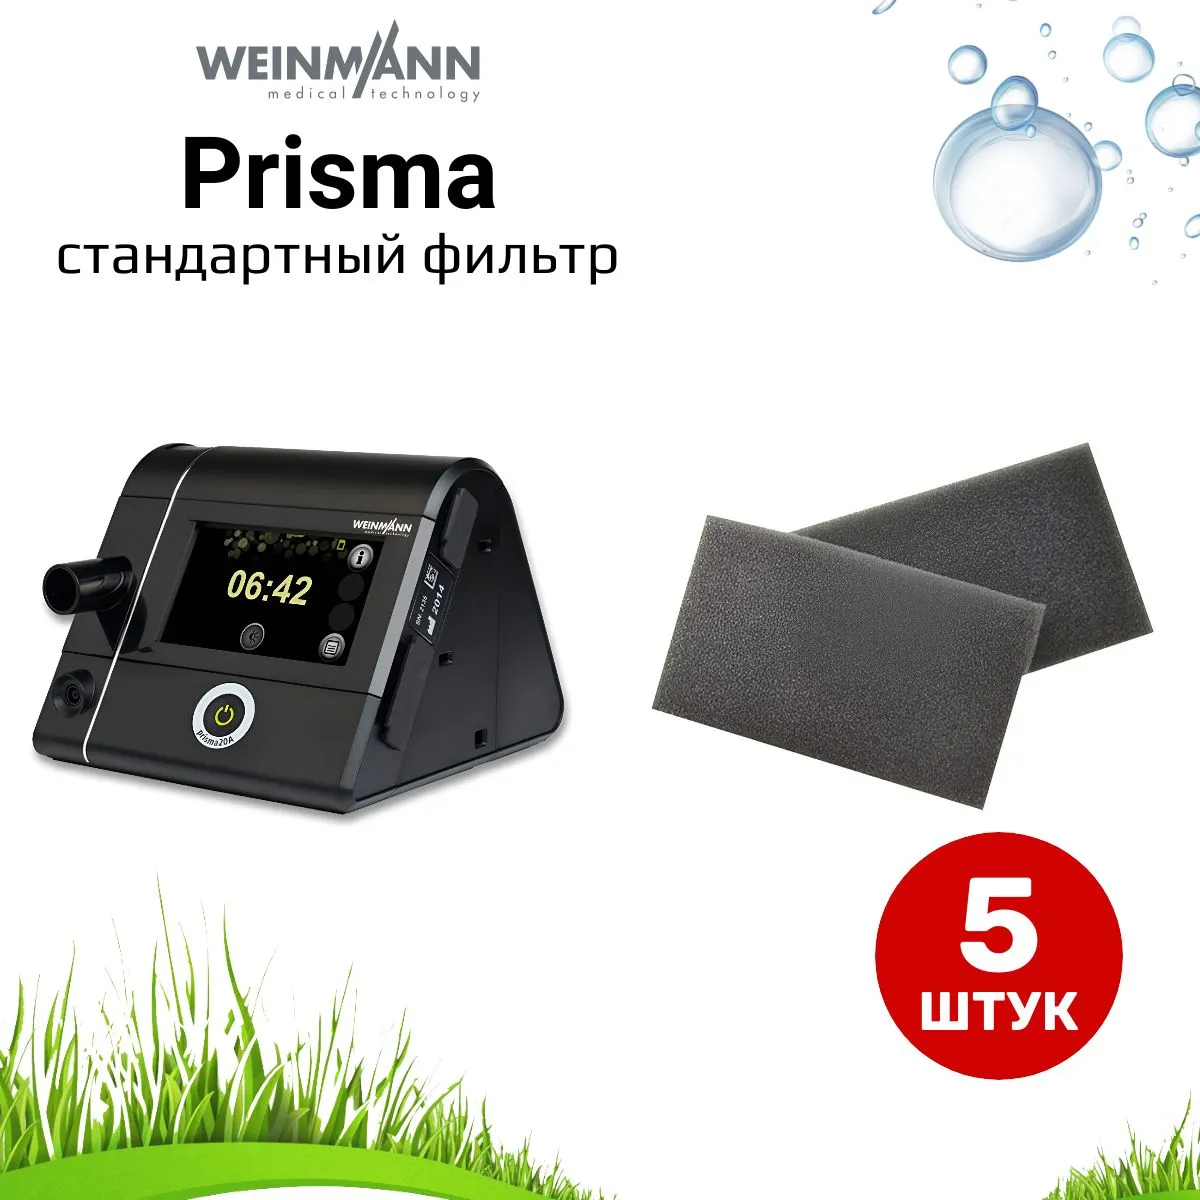 Weinmann Prisma стандартный фильтр (5 штук) для сипап